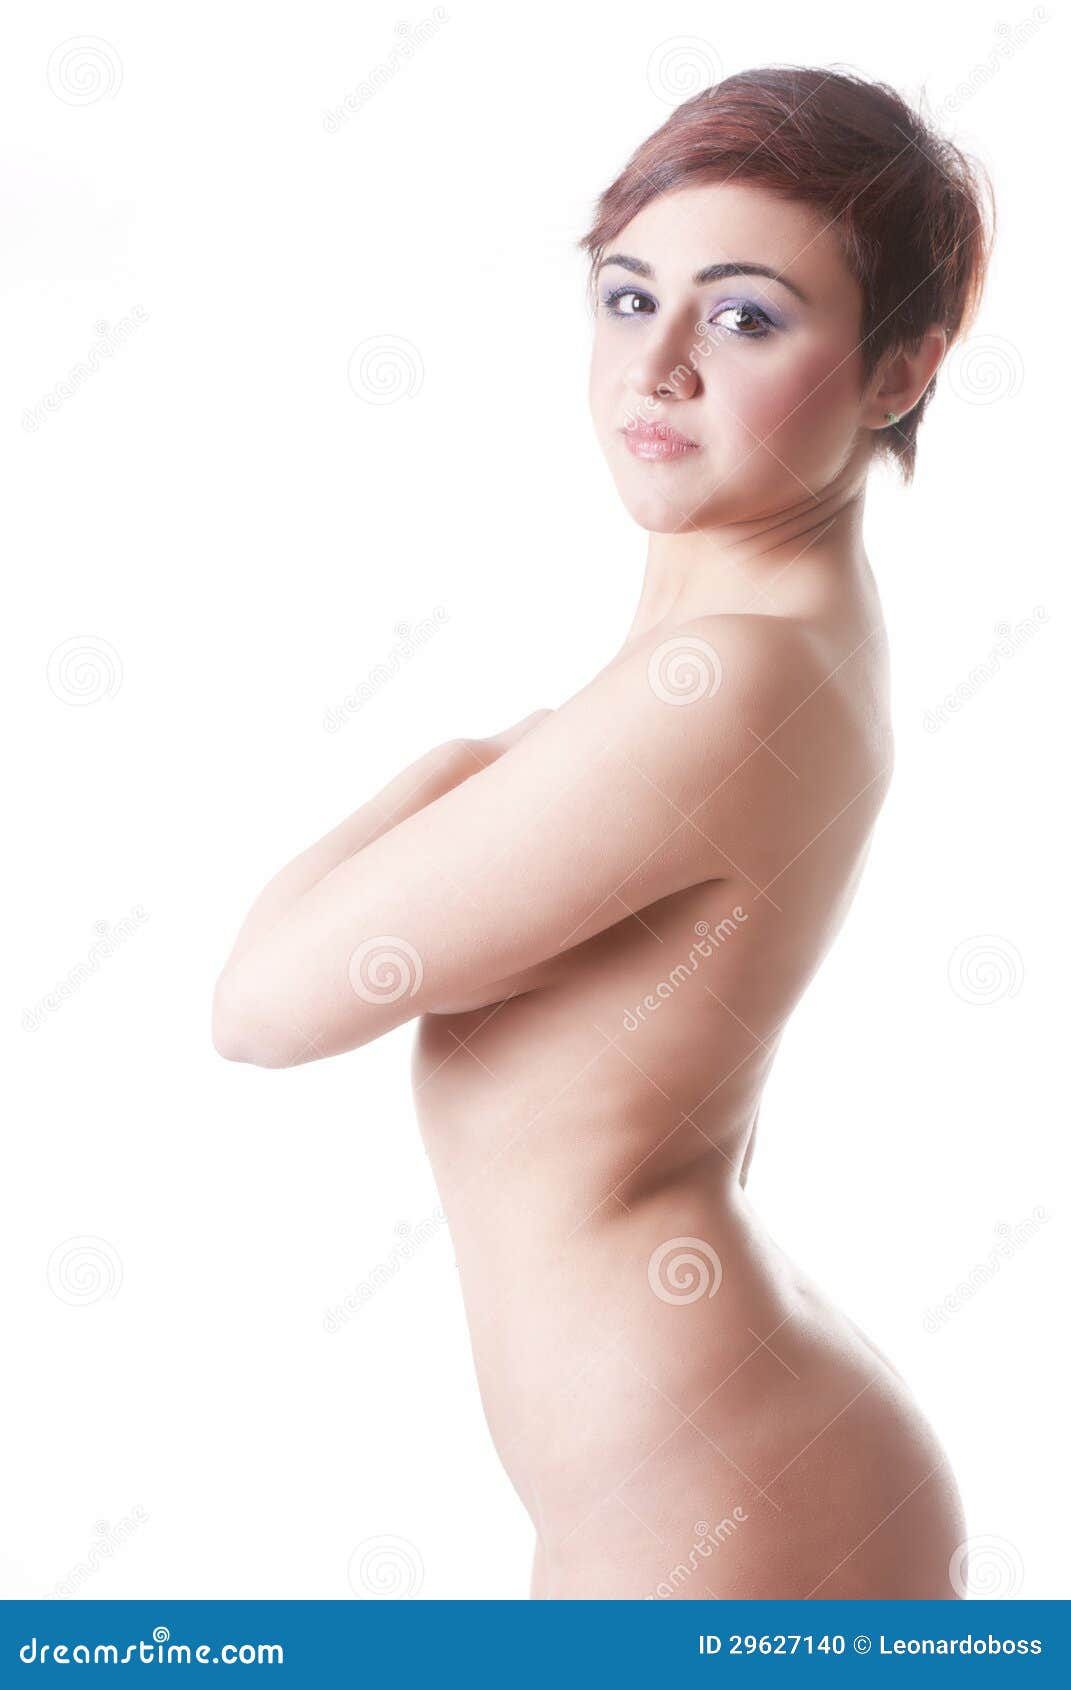 Naked woman stock photo. Image of light, background, human - 29627140